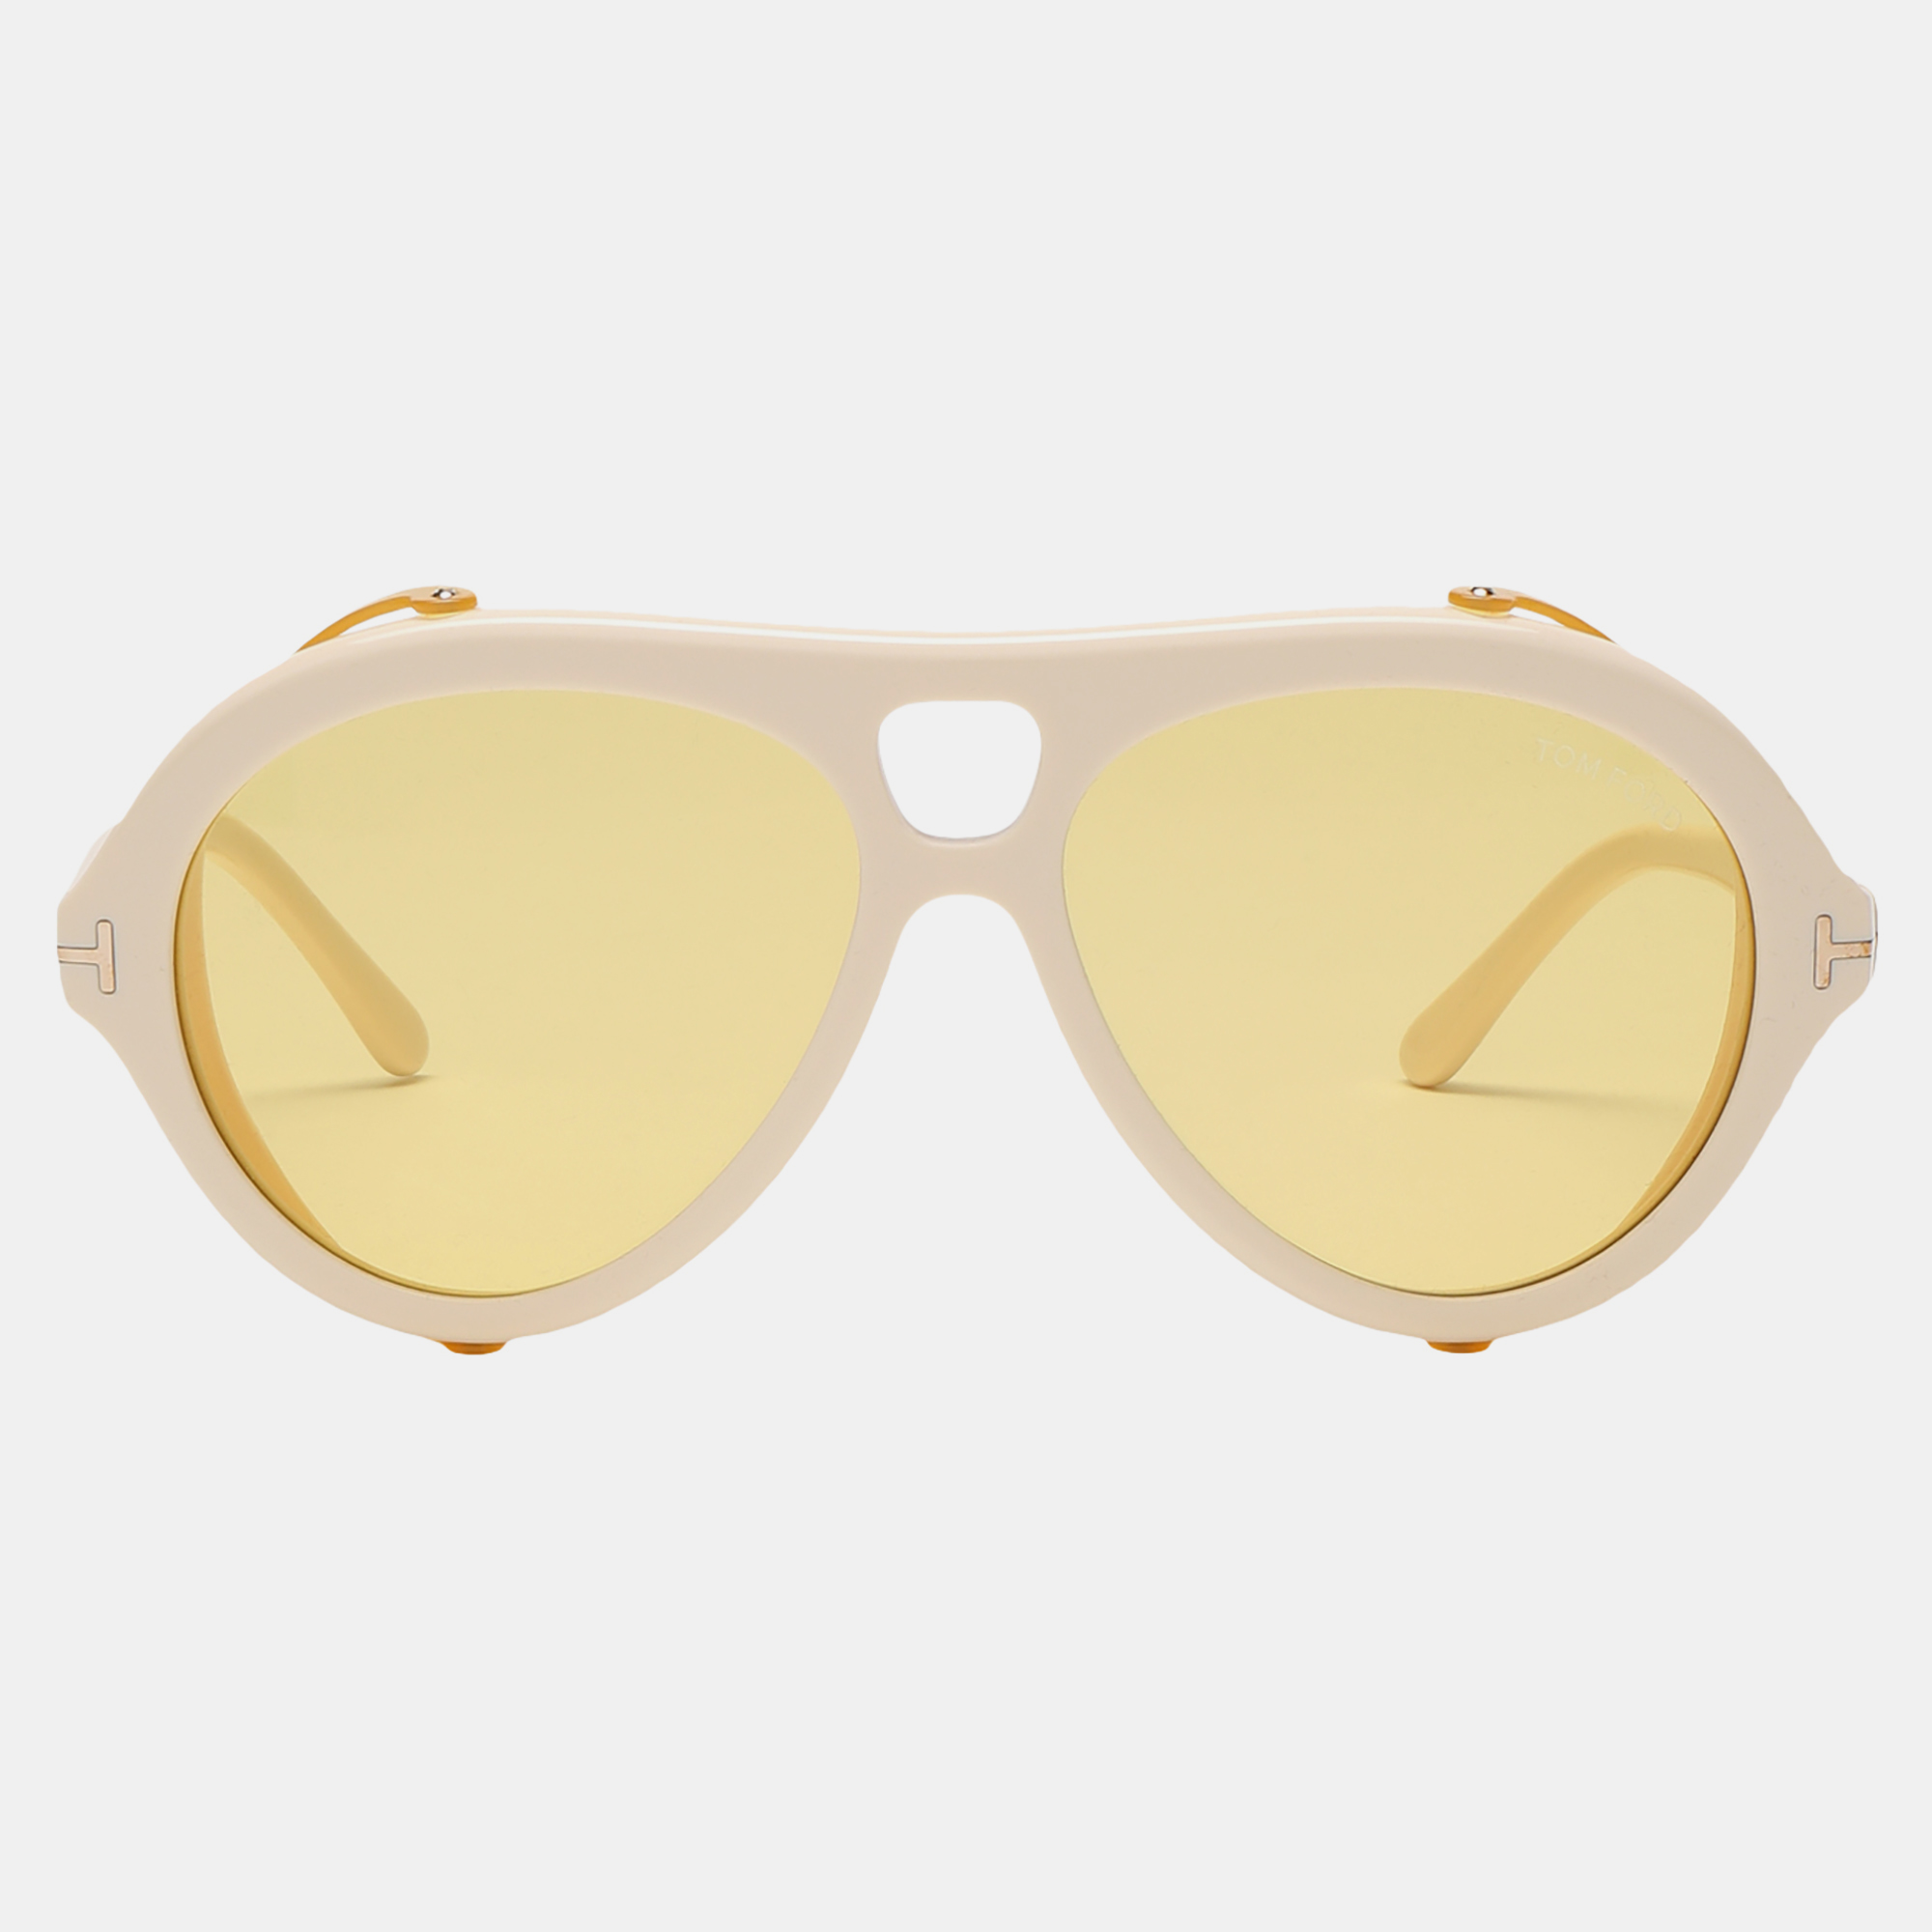 Tom ford yellow sunglasses 60